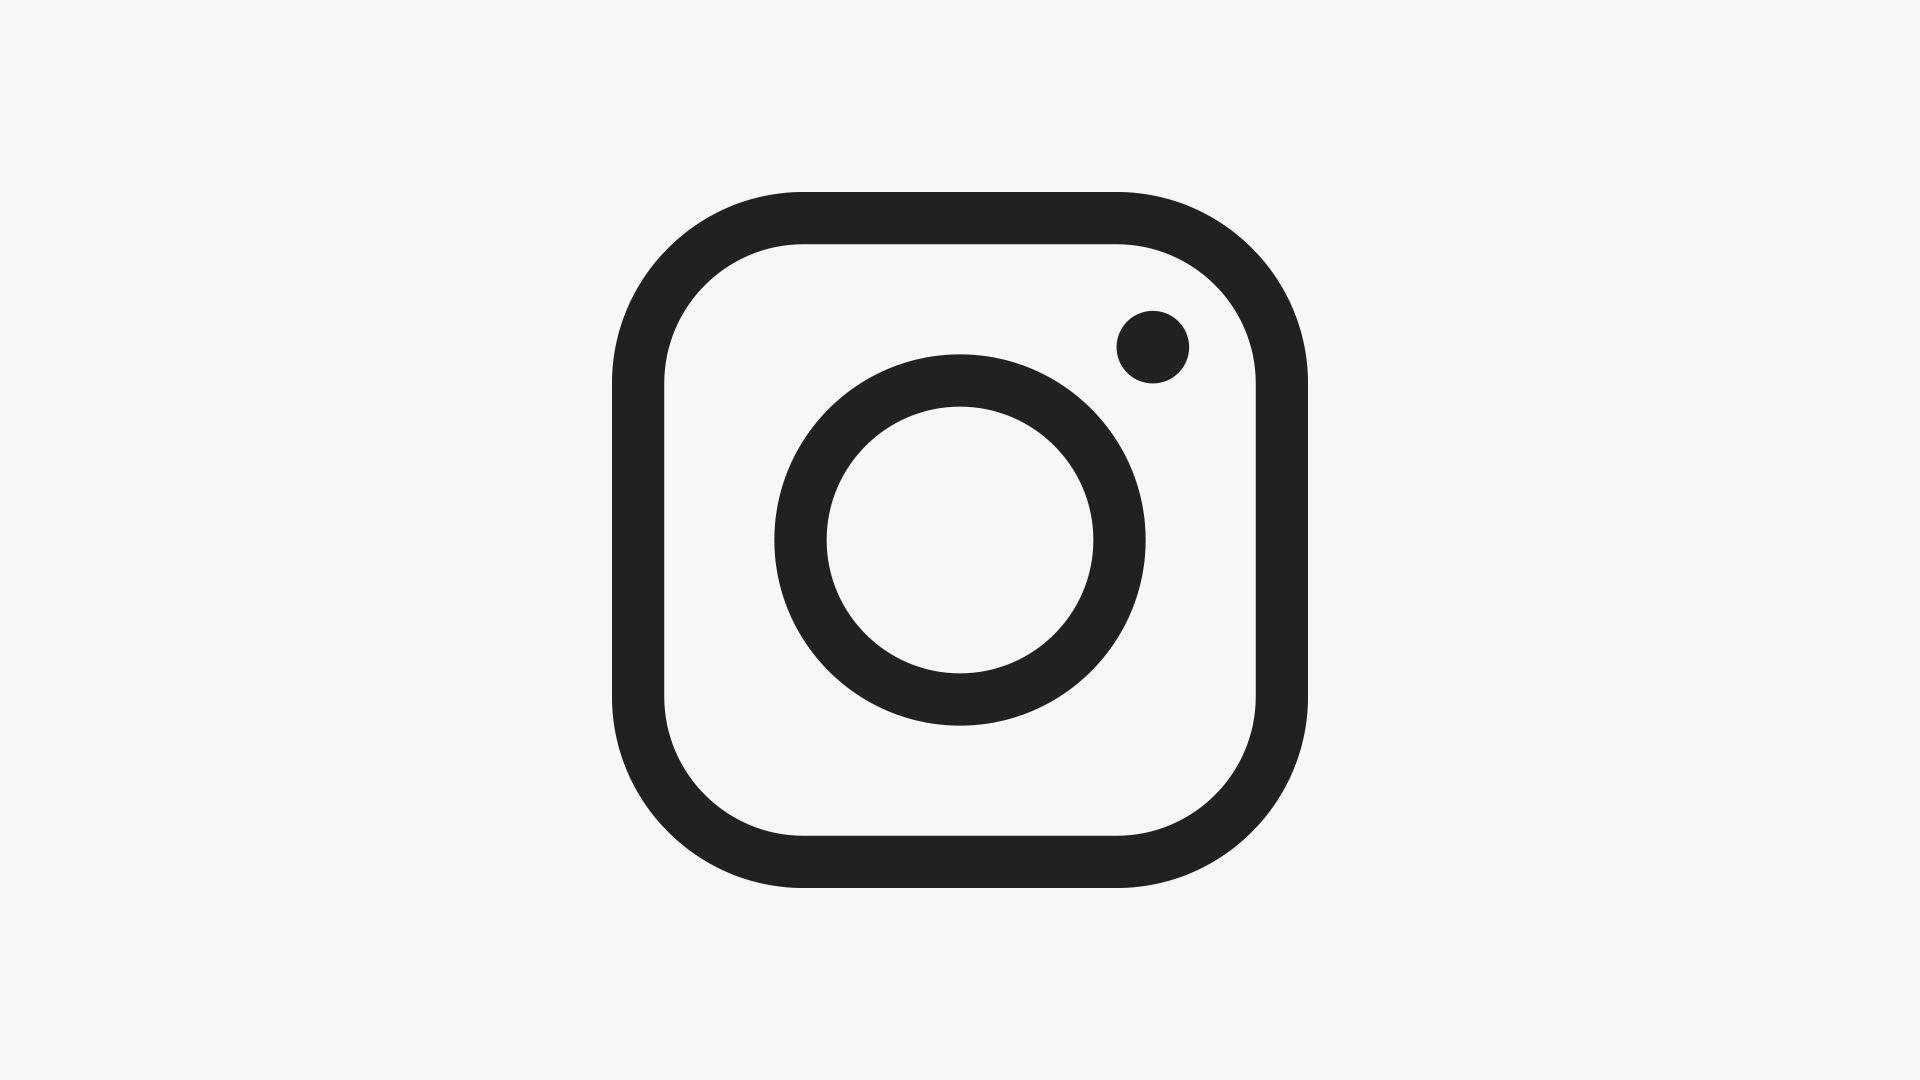 Instagram White Logo - Instagram Logo Icon in XD in 2020 | Instagram logo, Logos, Instagram